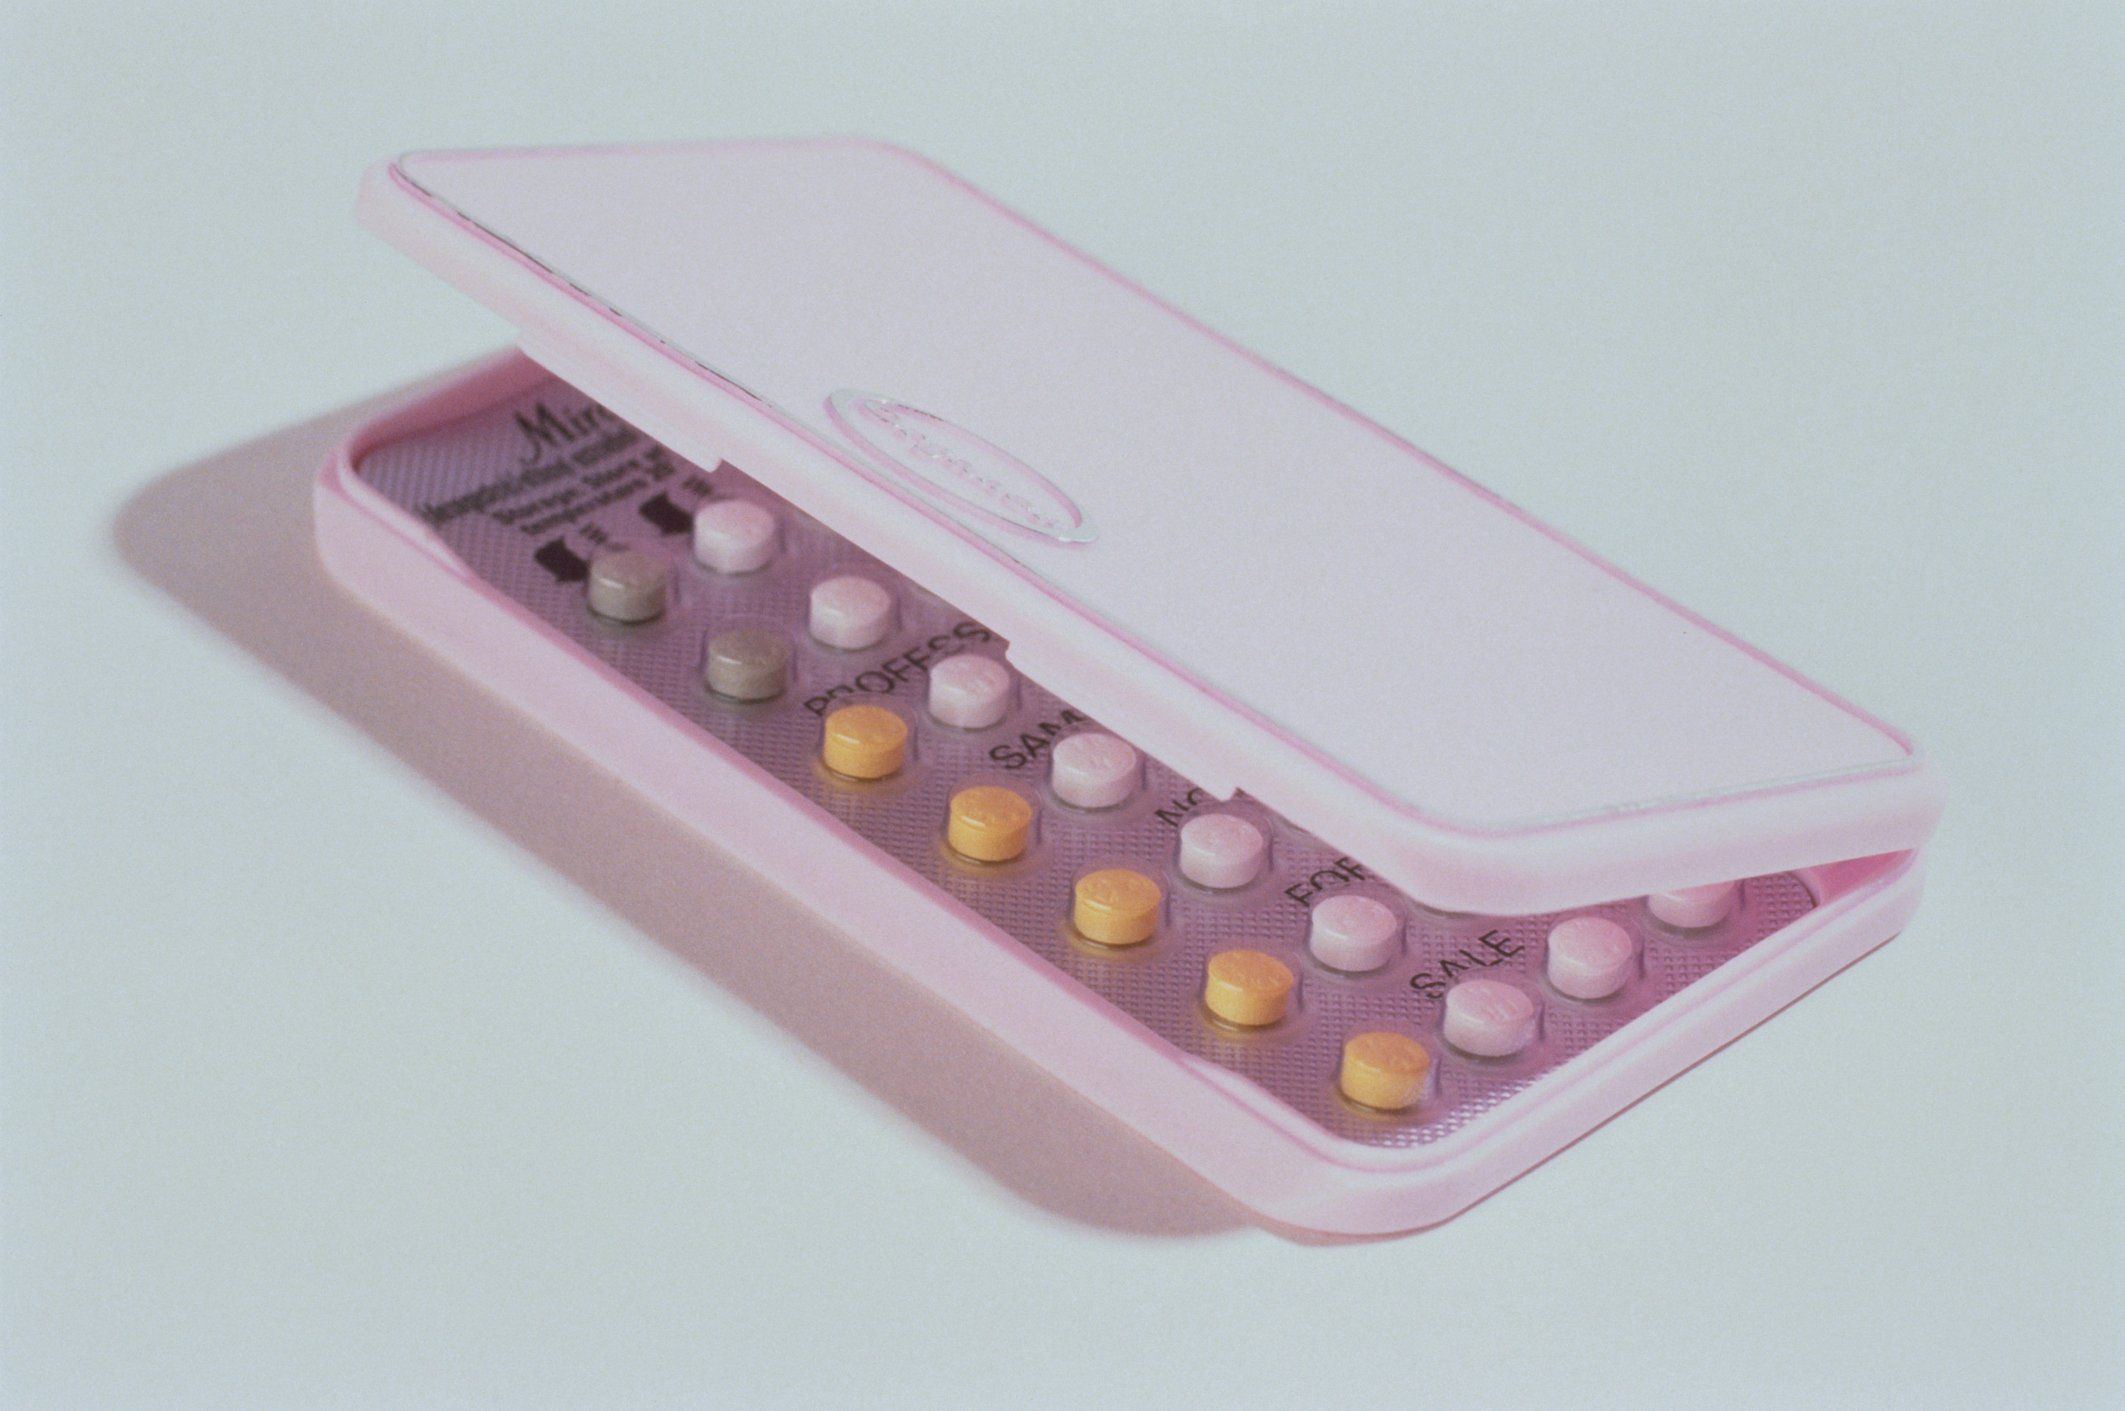 Boob increase from birth control